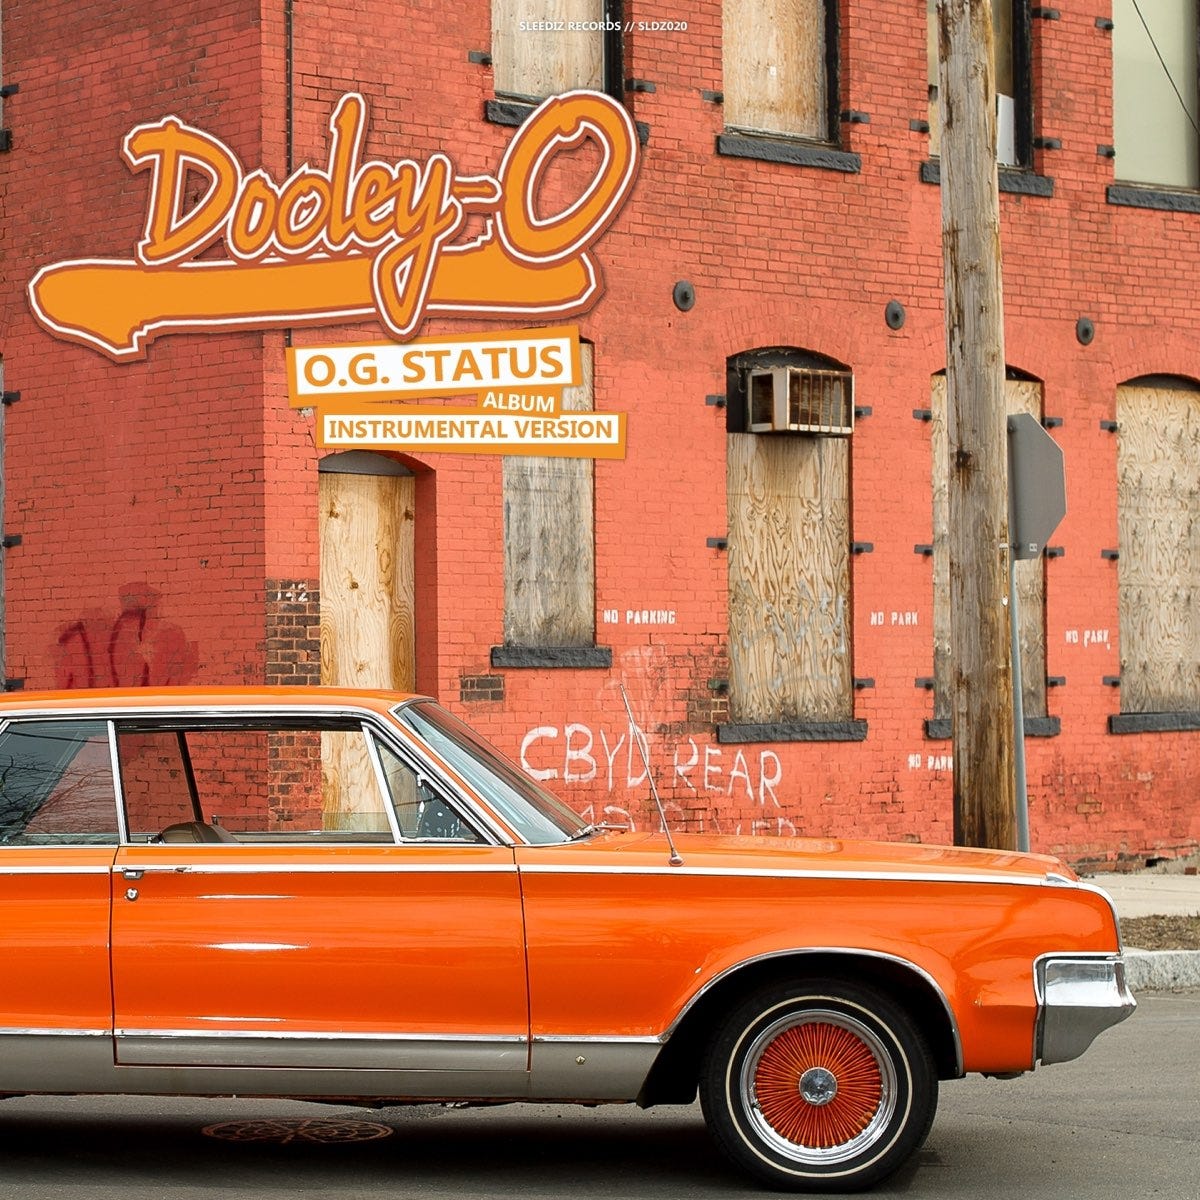 O.G. Status (Instrumental Version) - Album by Dooley-O - Apple Music